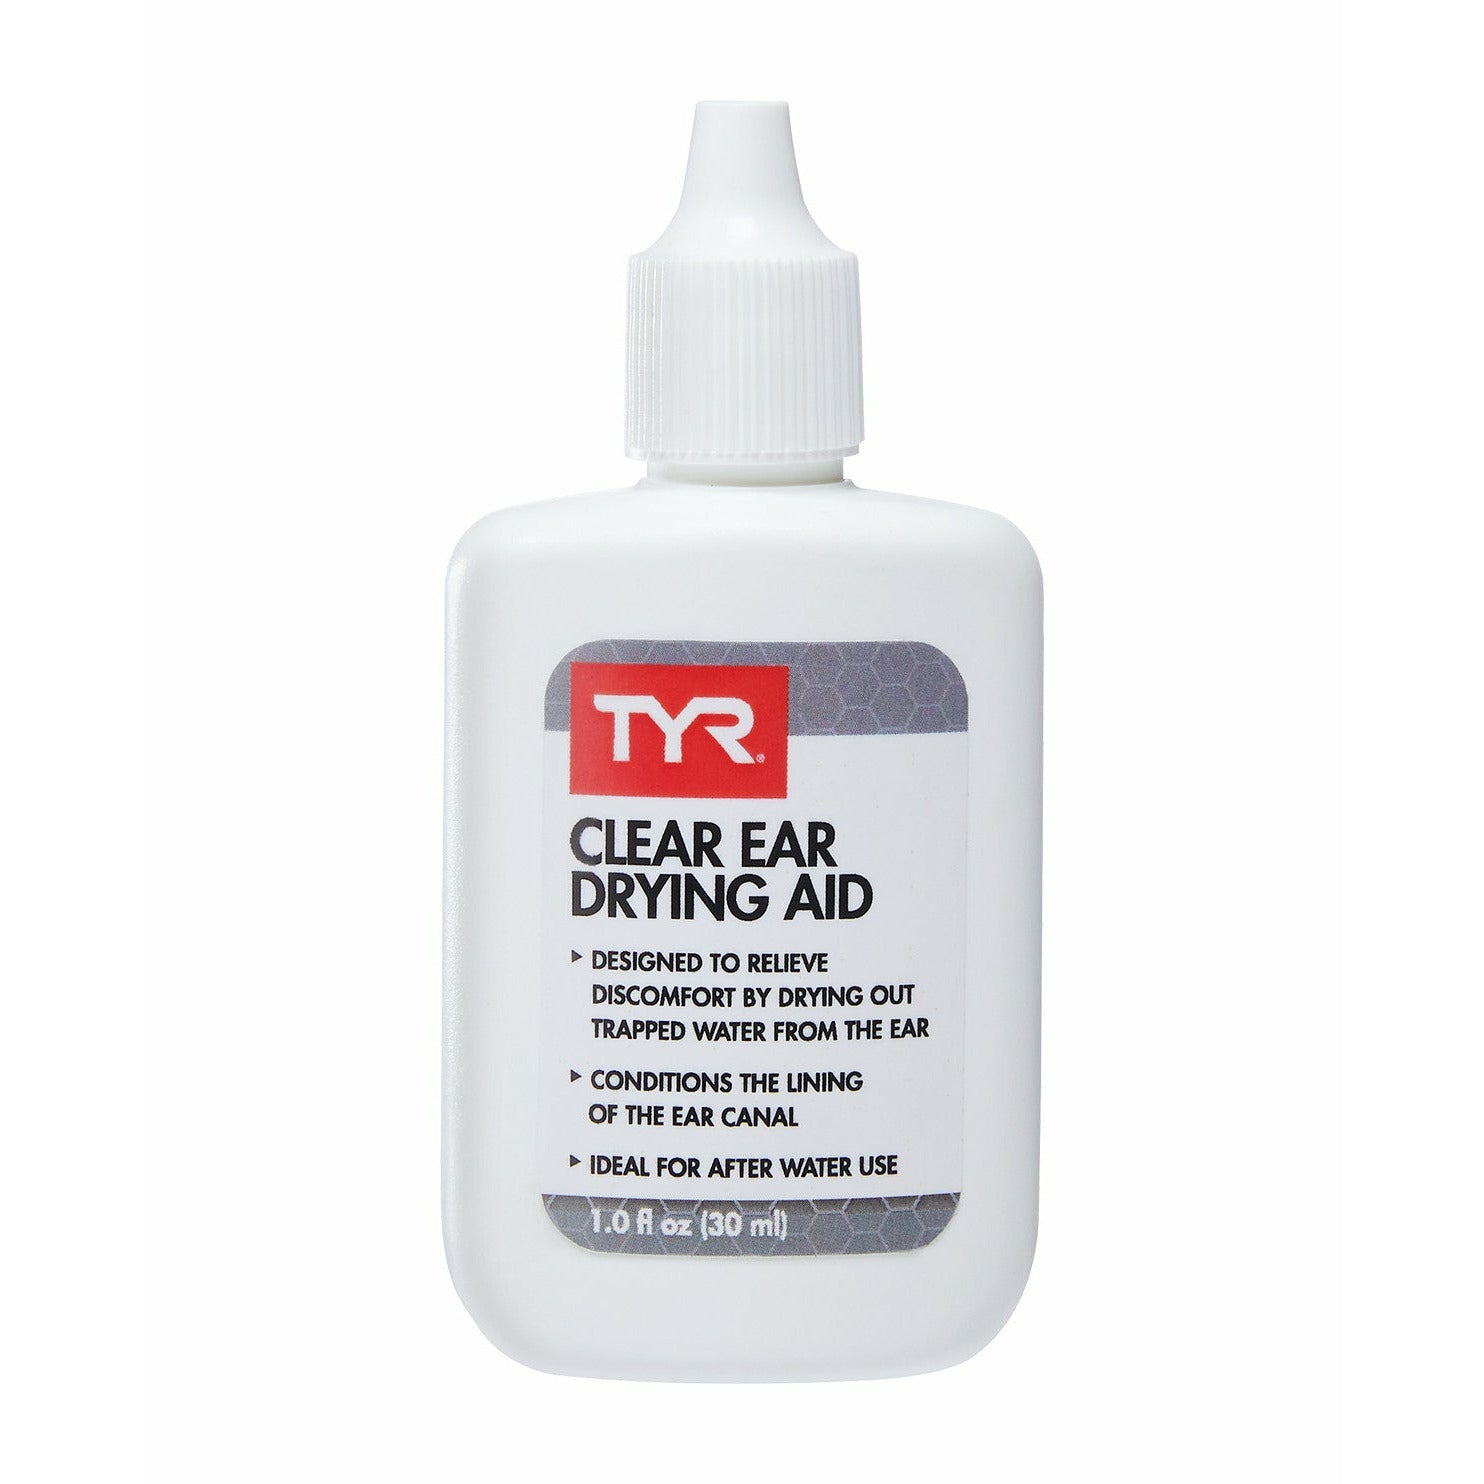 TYR Clear Ear Drying Aid